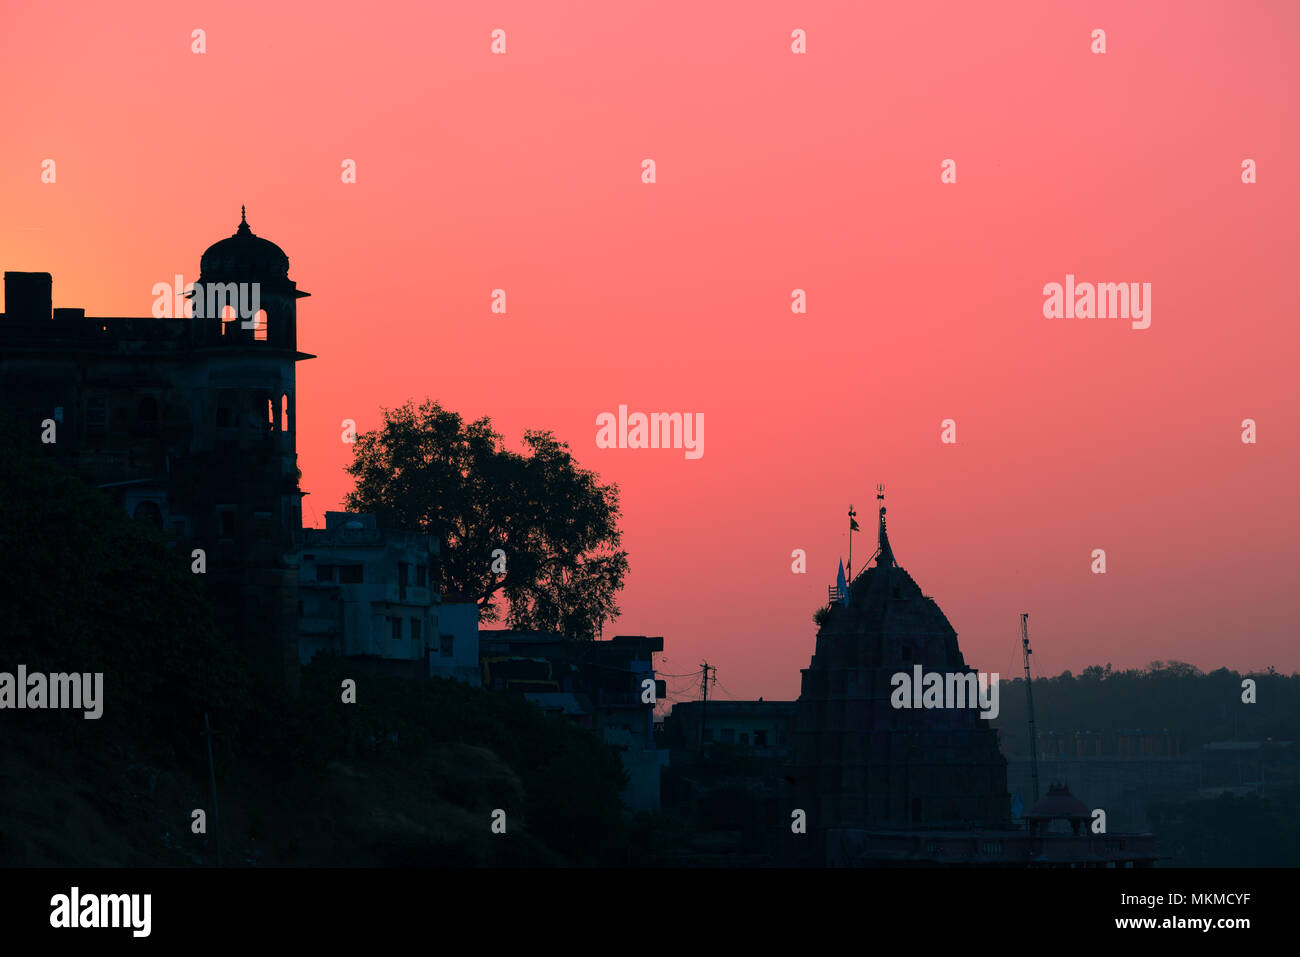 Gebäude Silhouette bei Sonnenuntergang in Indien. Rot Orange Violett bunte Himmel. Travel Concept. Maheshwar Palast und Tempel komplex. Stockfoto